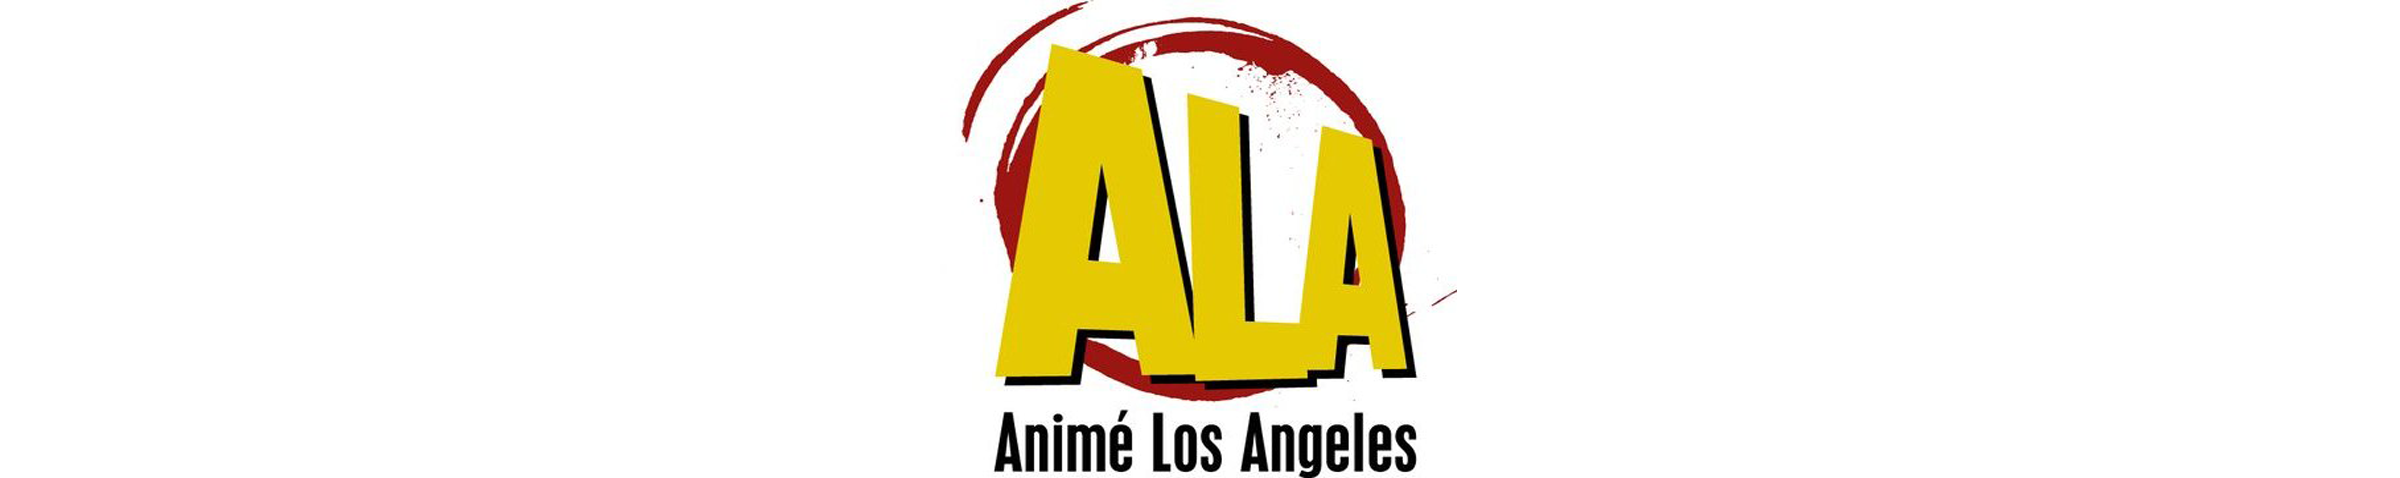 ALA logo